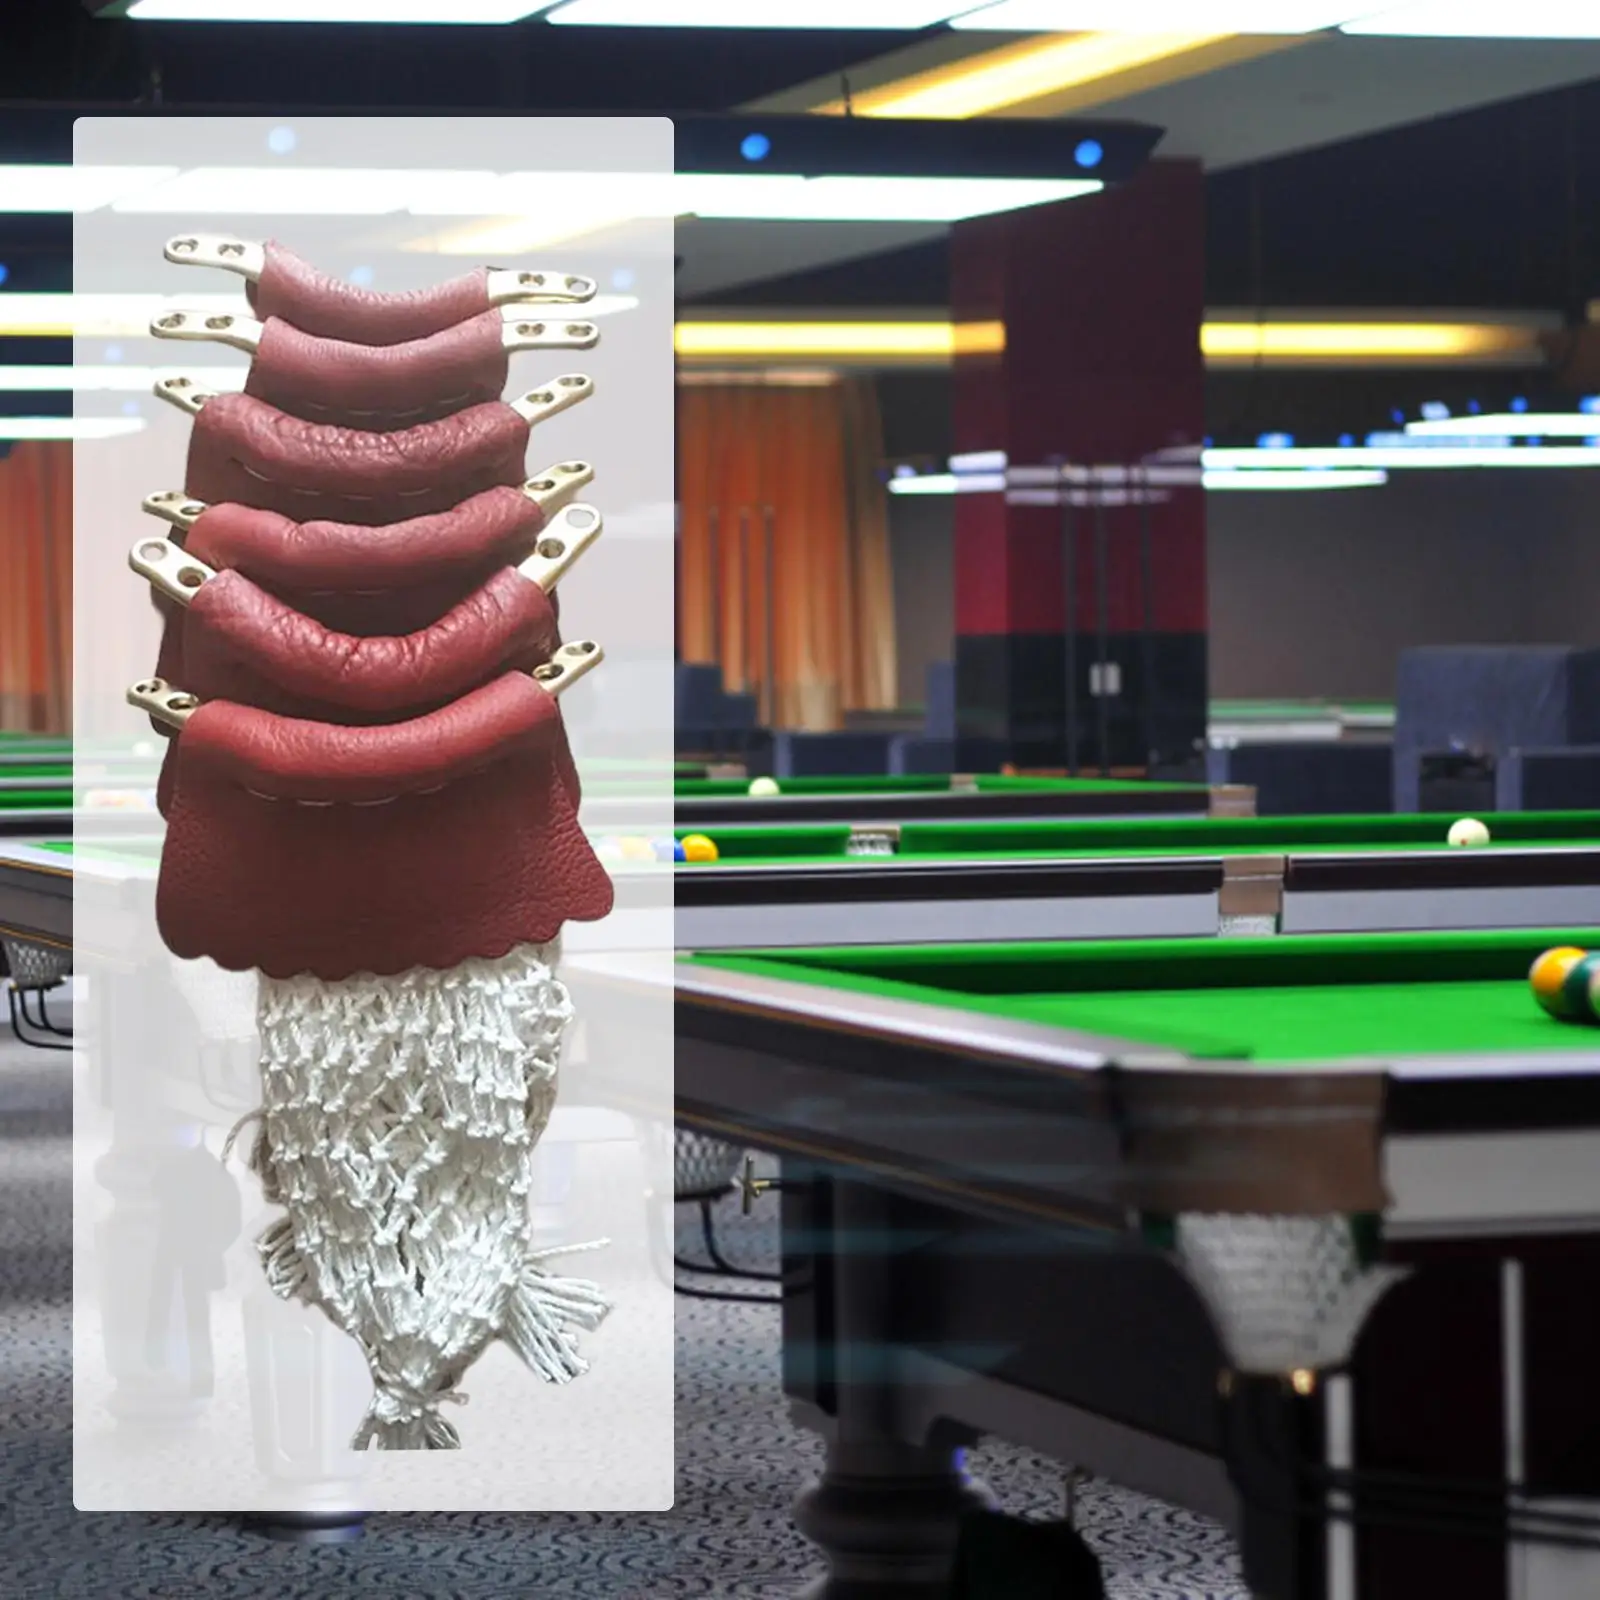 Billiard Pool Table Pocket Net 6Pcs/Set Replacement Billiards Mesh Bag